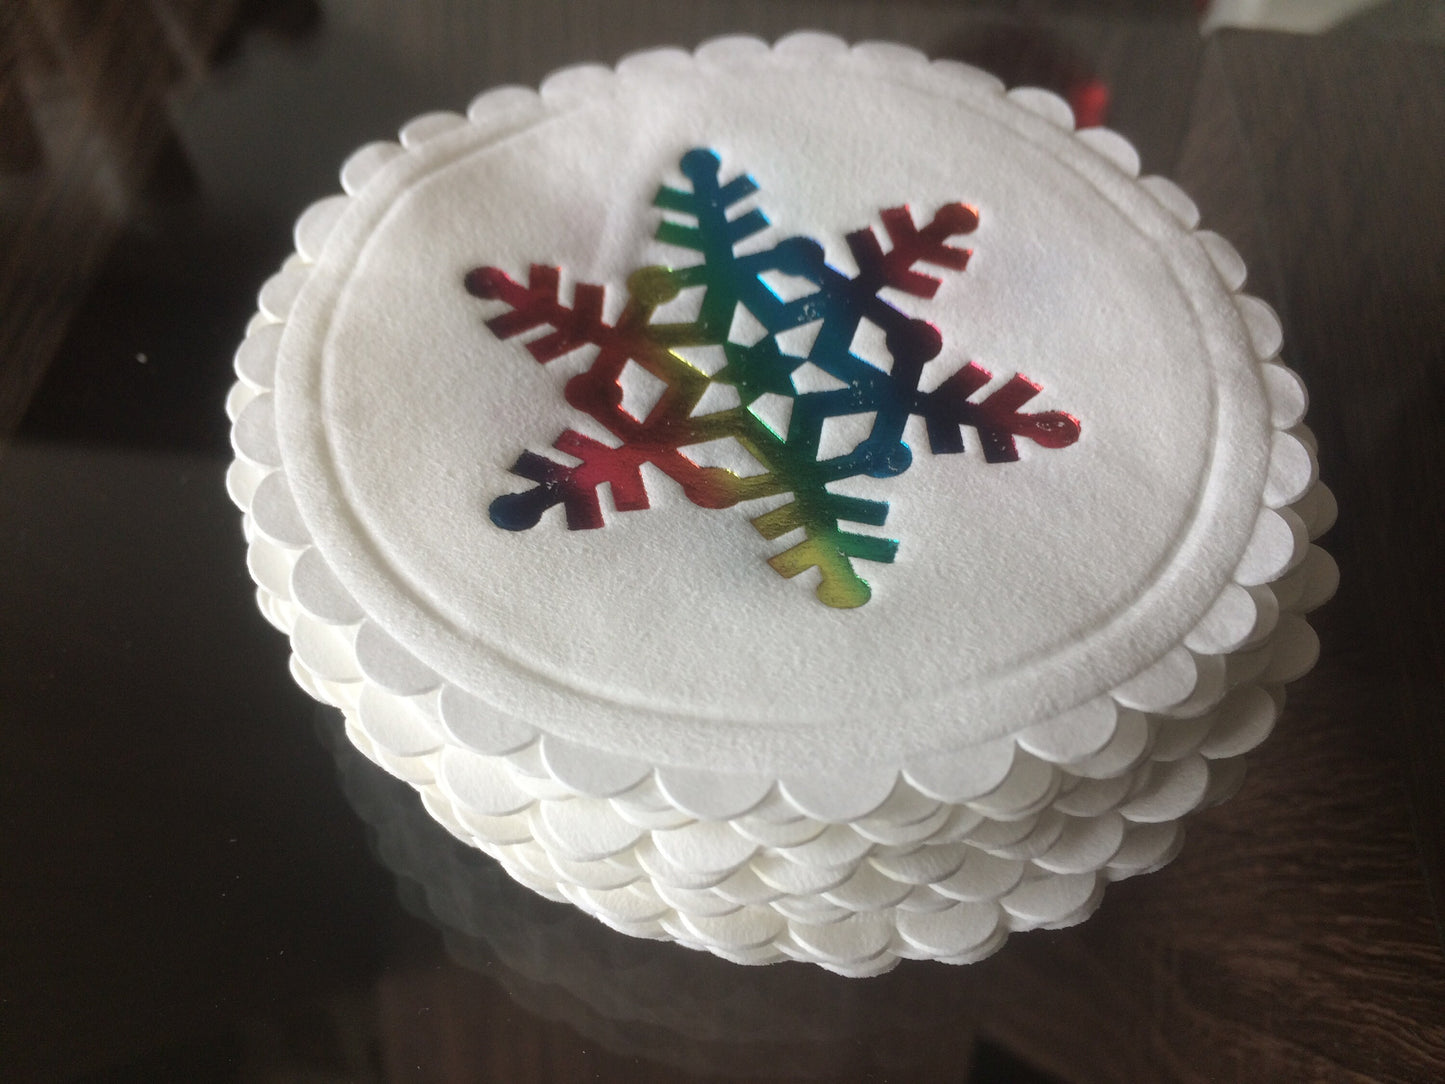 25 x Paper multi ply coasters with rainbow snowflake foil design Christmas tableware idea